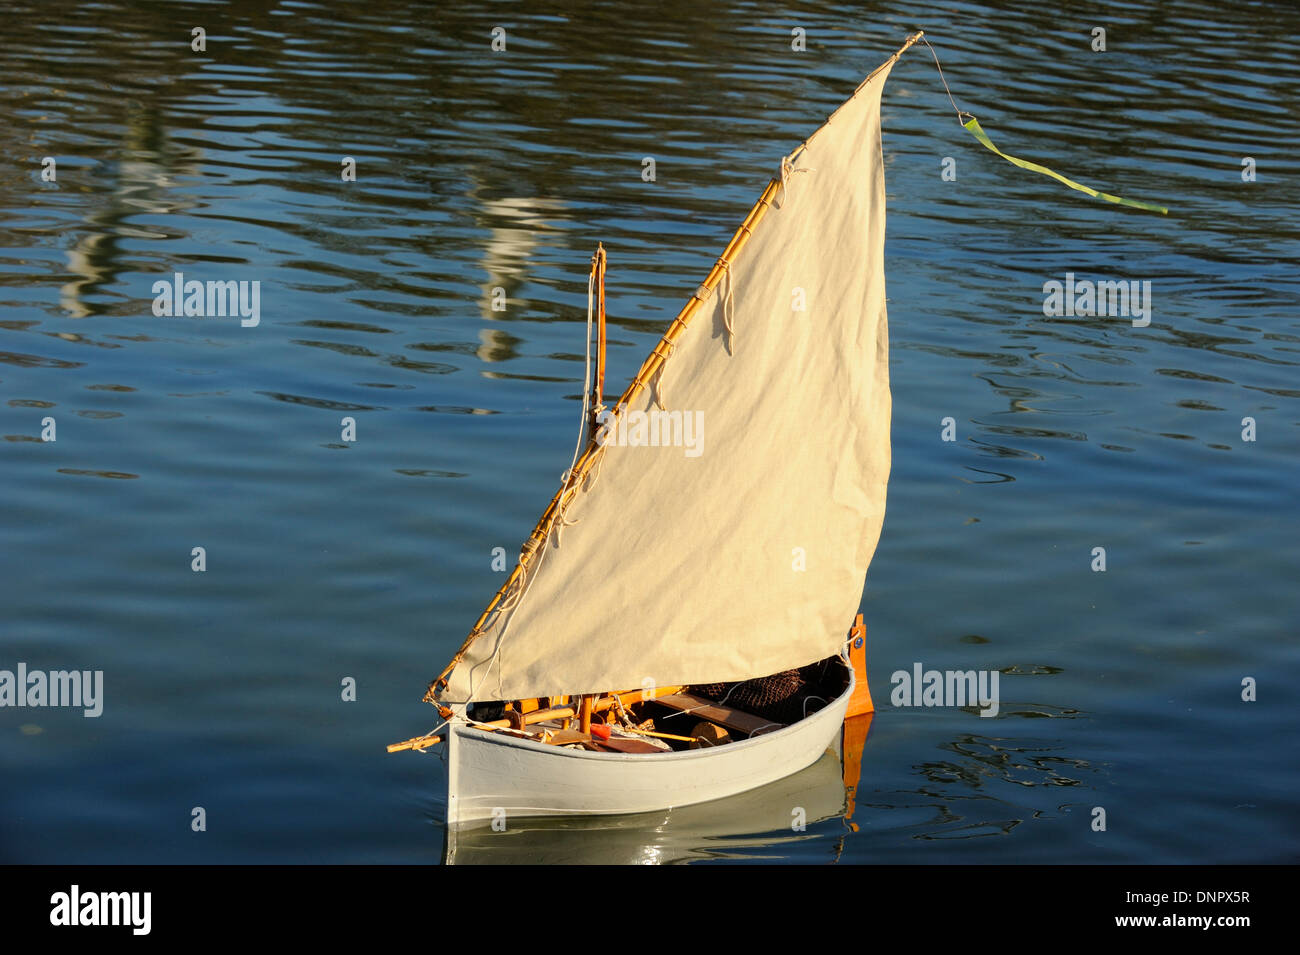 https://c8.alamy.com/comp/DNPX5R/wooden-model-boat-sailing-on-the-ornamental-lake-of-luxembourg-garden-DNPX5R.jpg